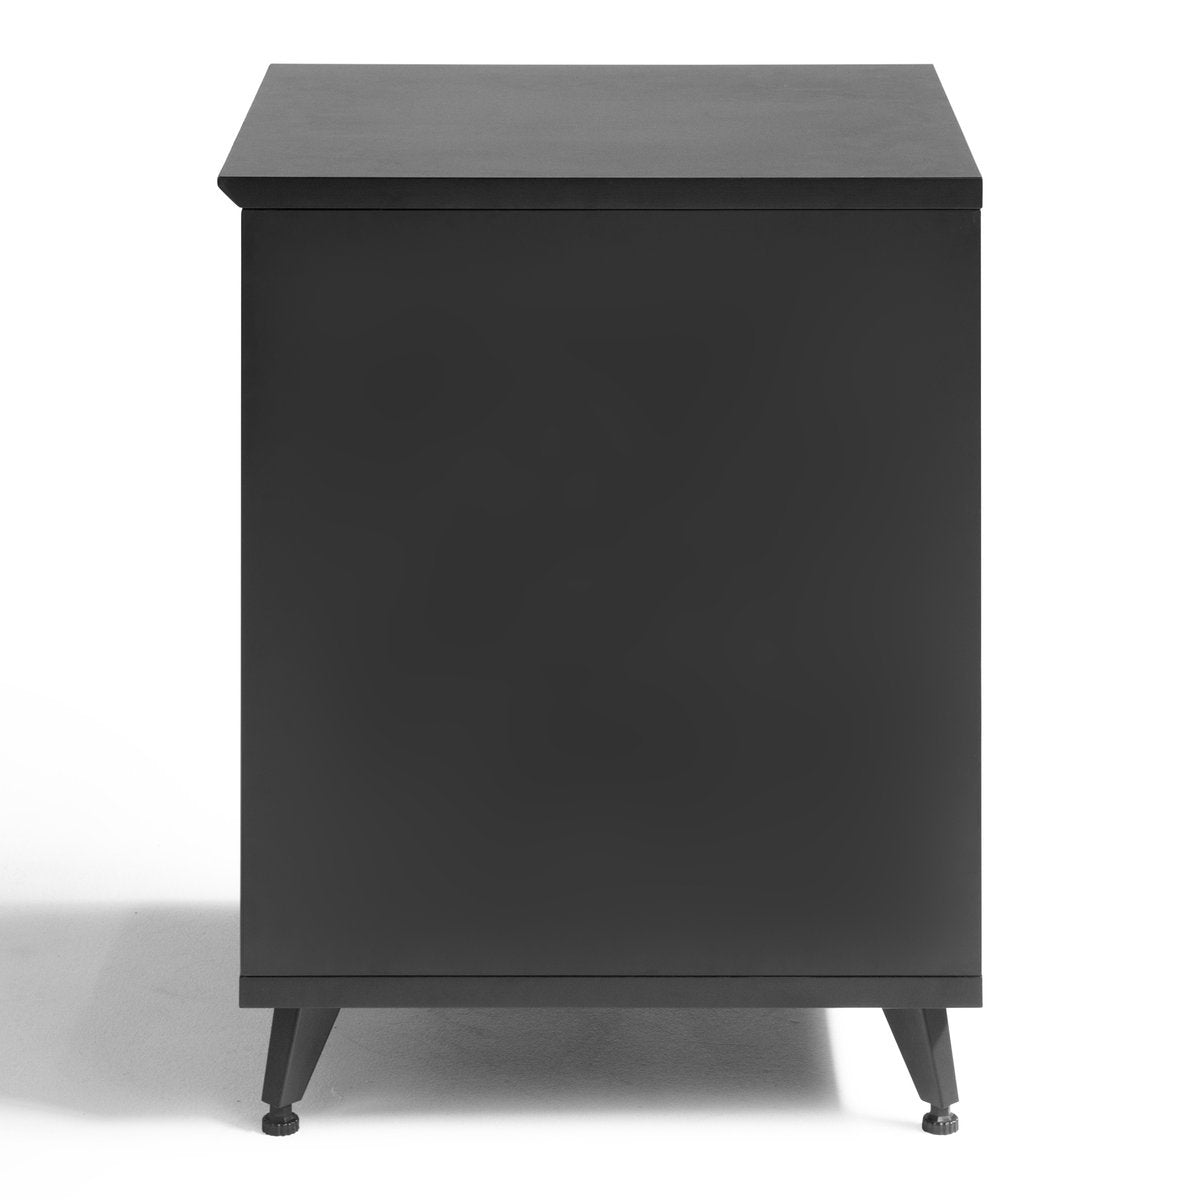 Gator Frameworks Elite Series Furniture Desk 10U Rack - Black, View 4